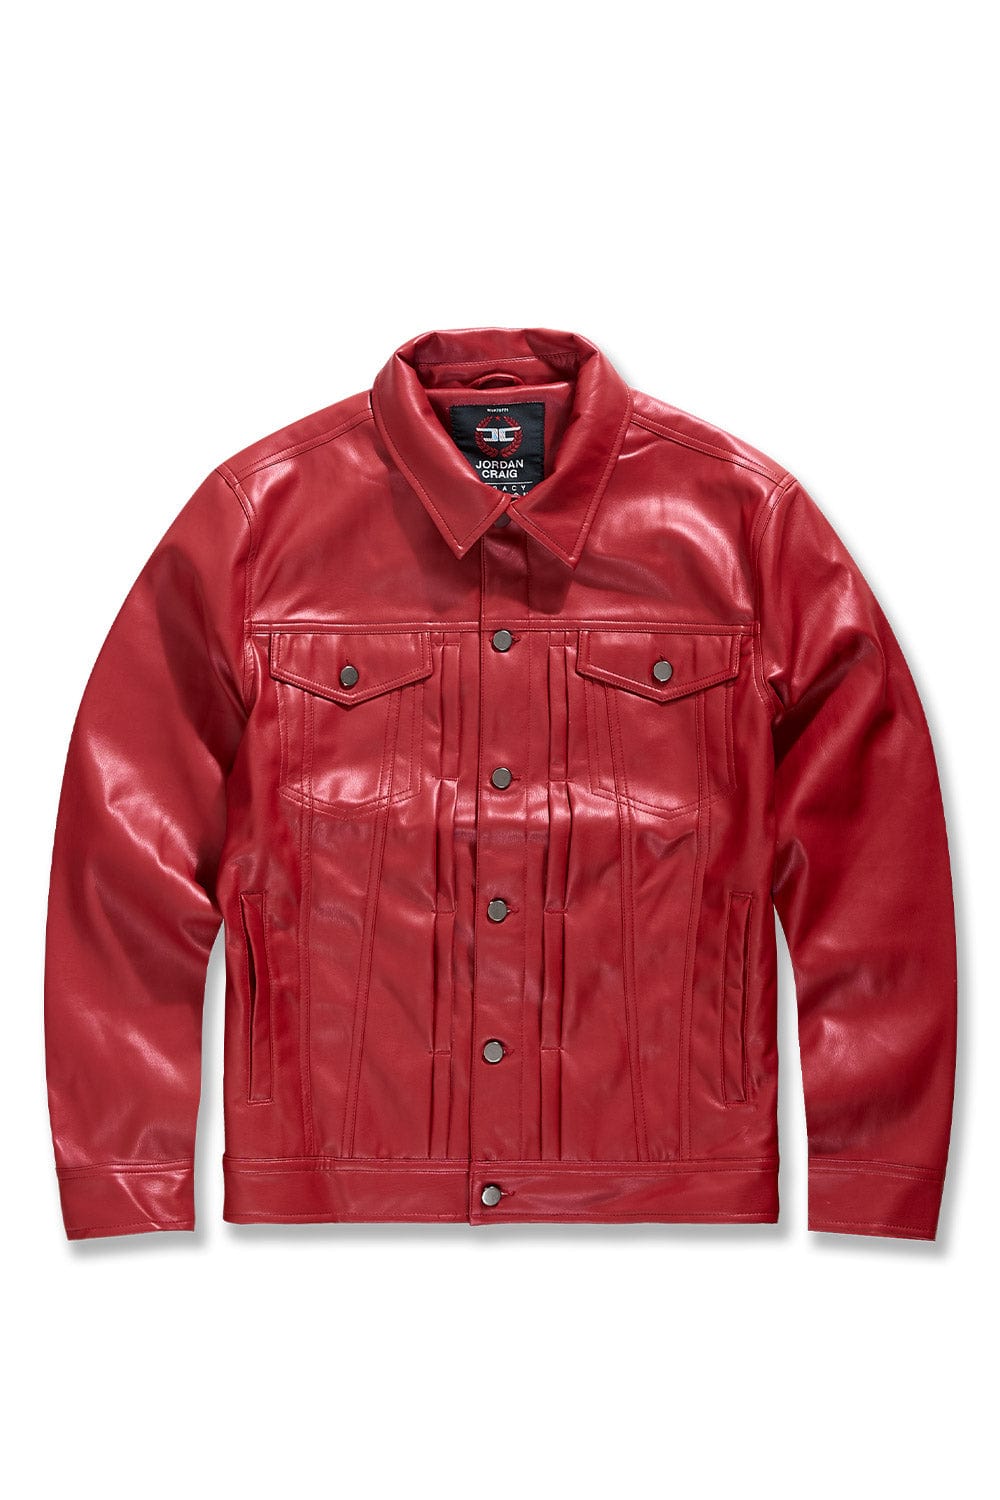 Jordan Craig Thriller Trucker Jacket (Red) S / Red